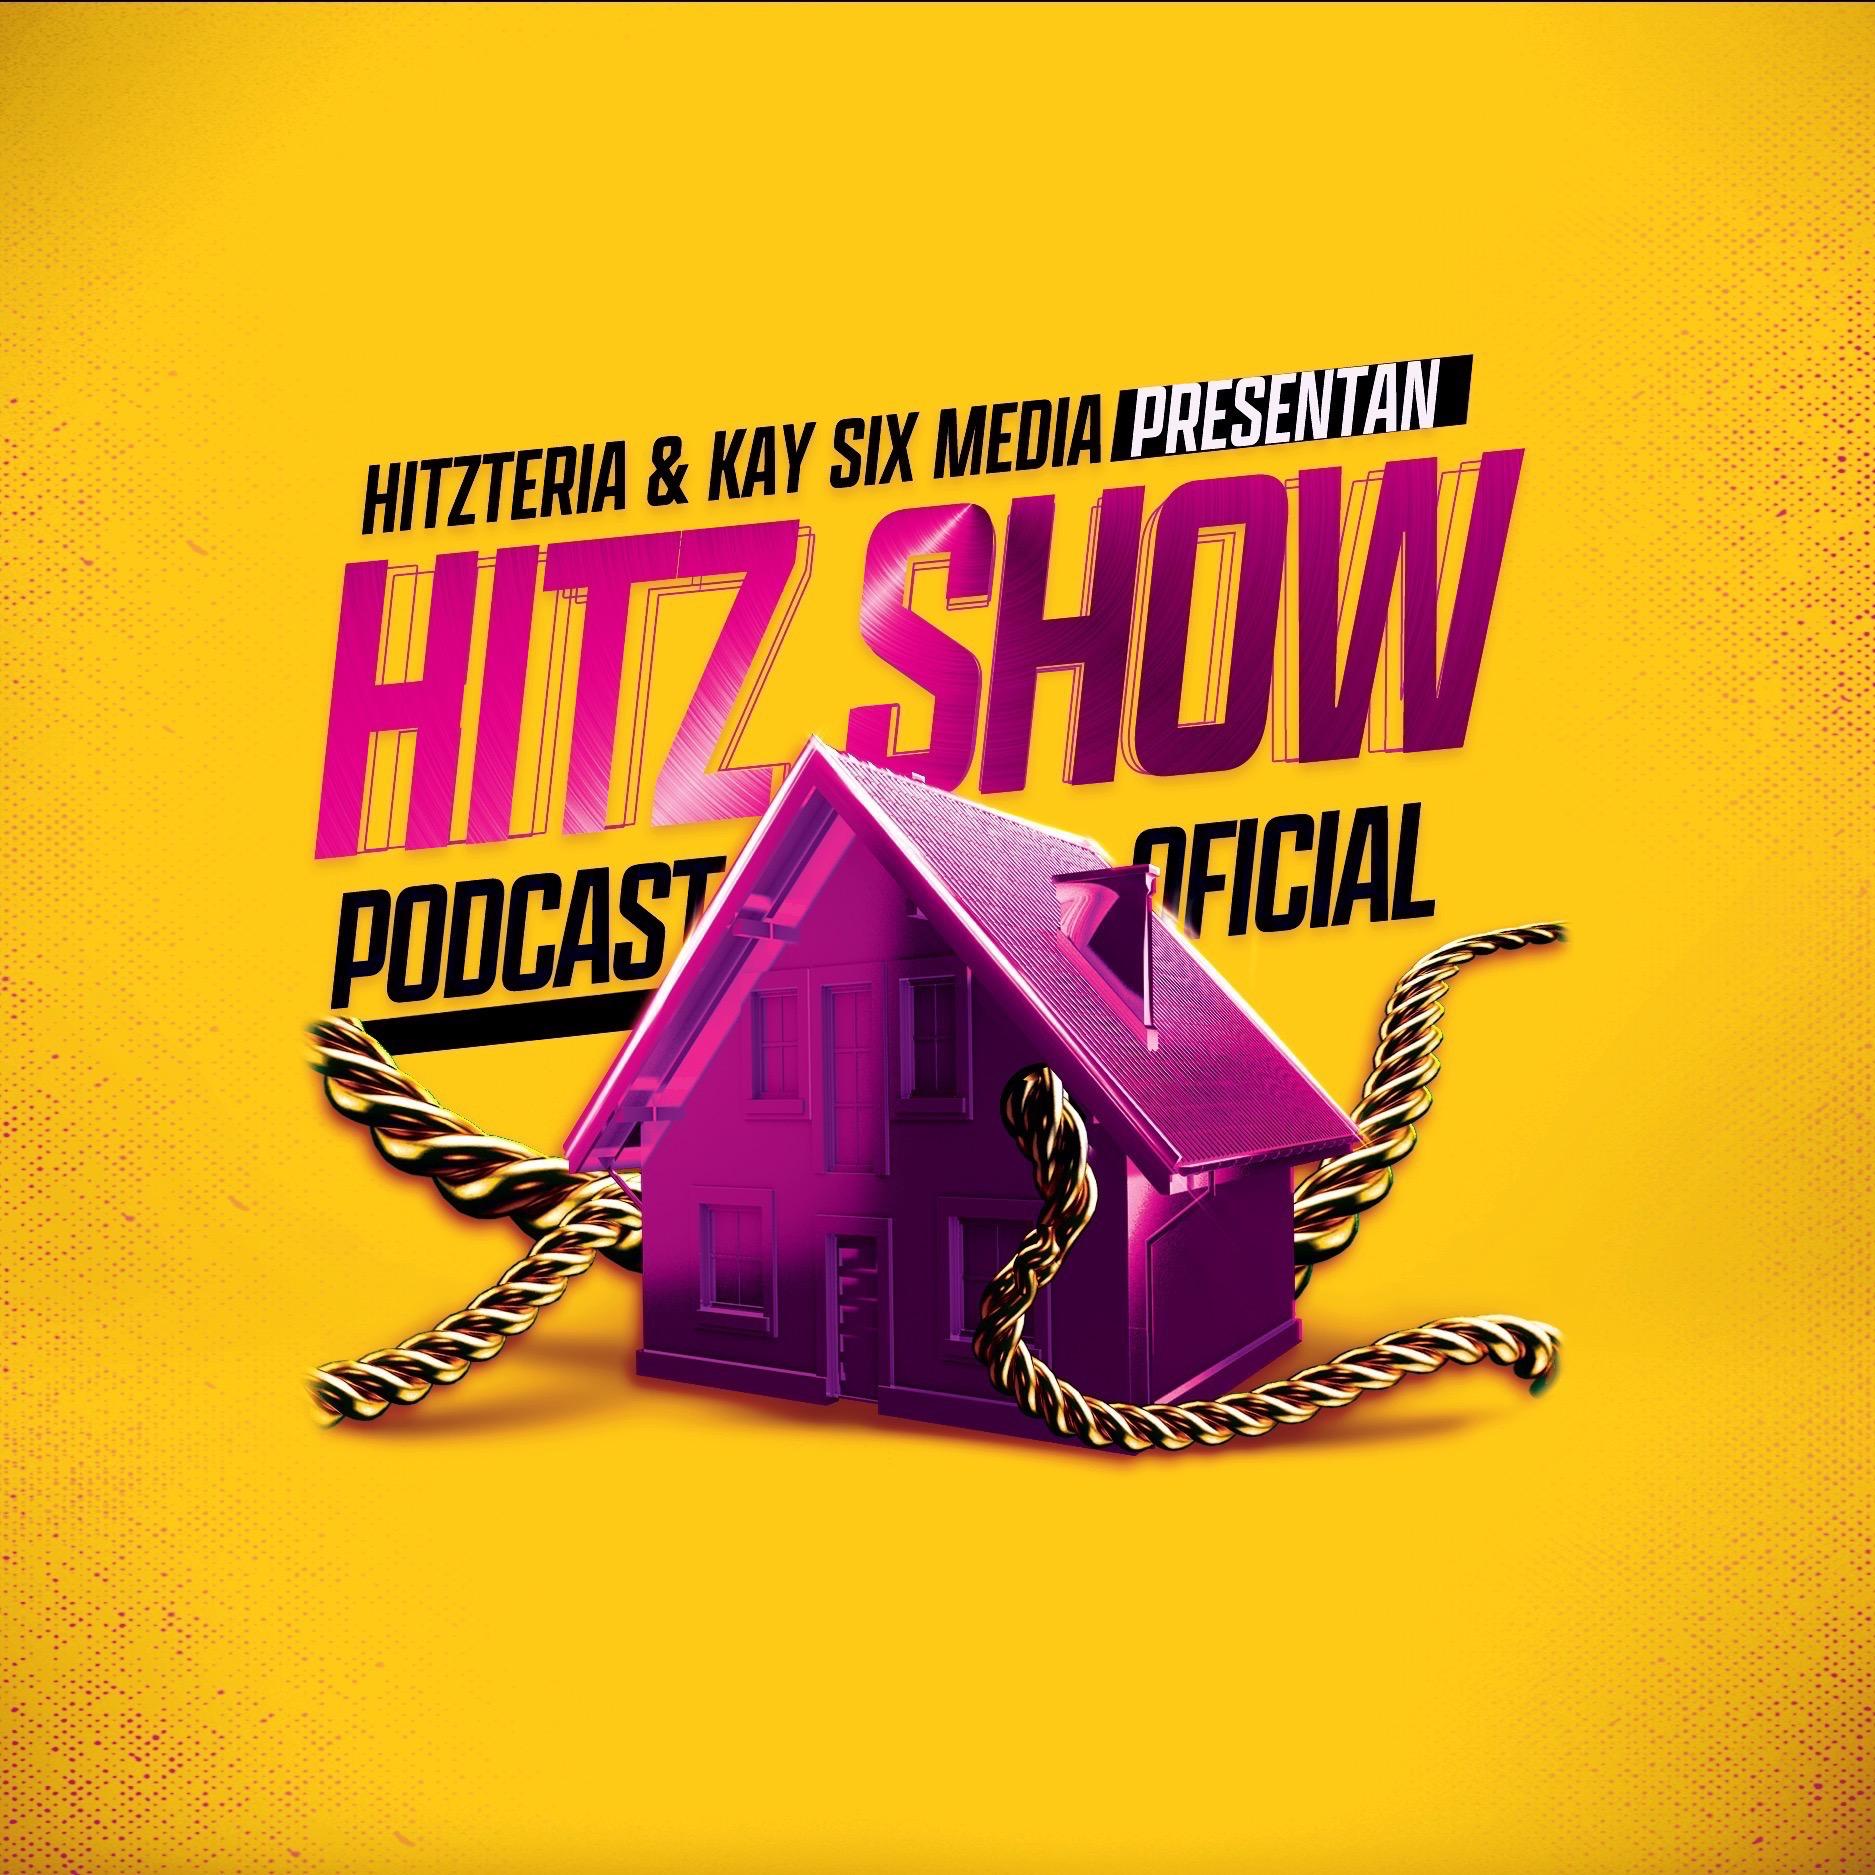 Hitz Show